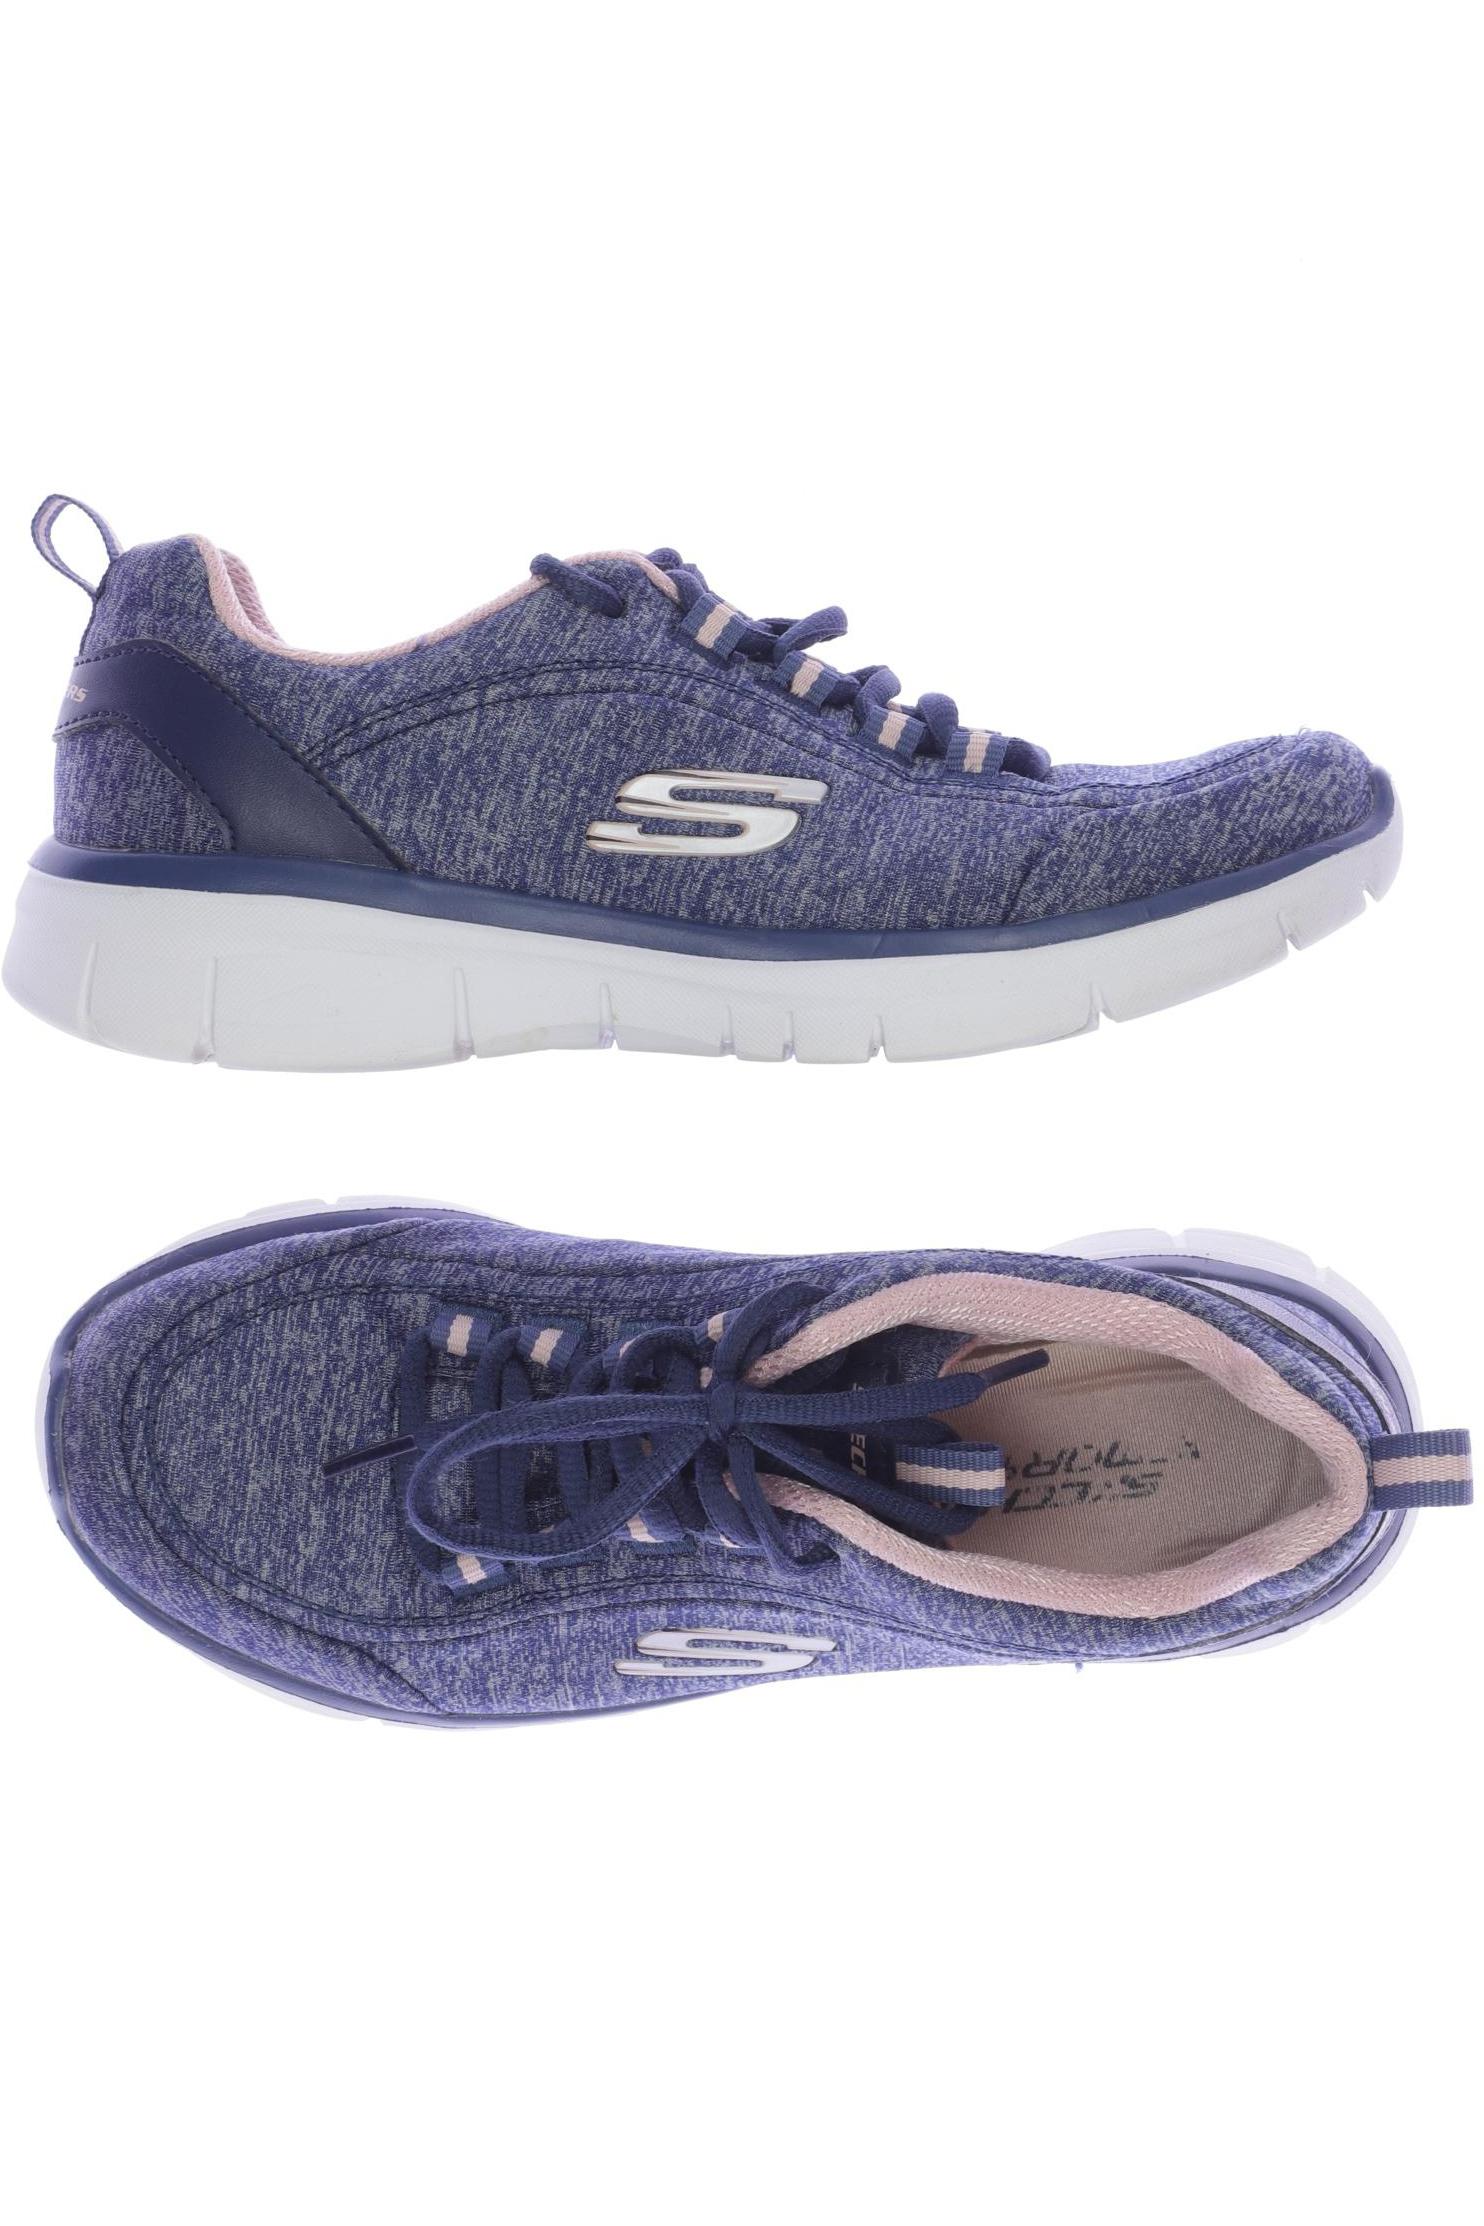 SKECHERS Damen Sneakers, blau von Skechers